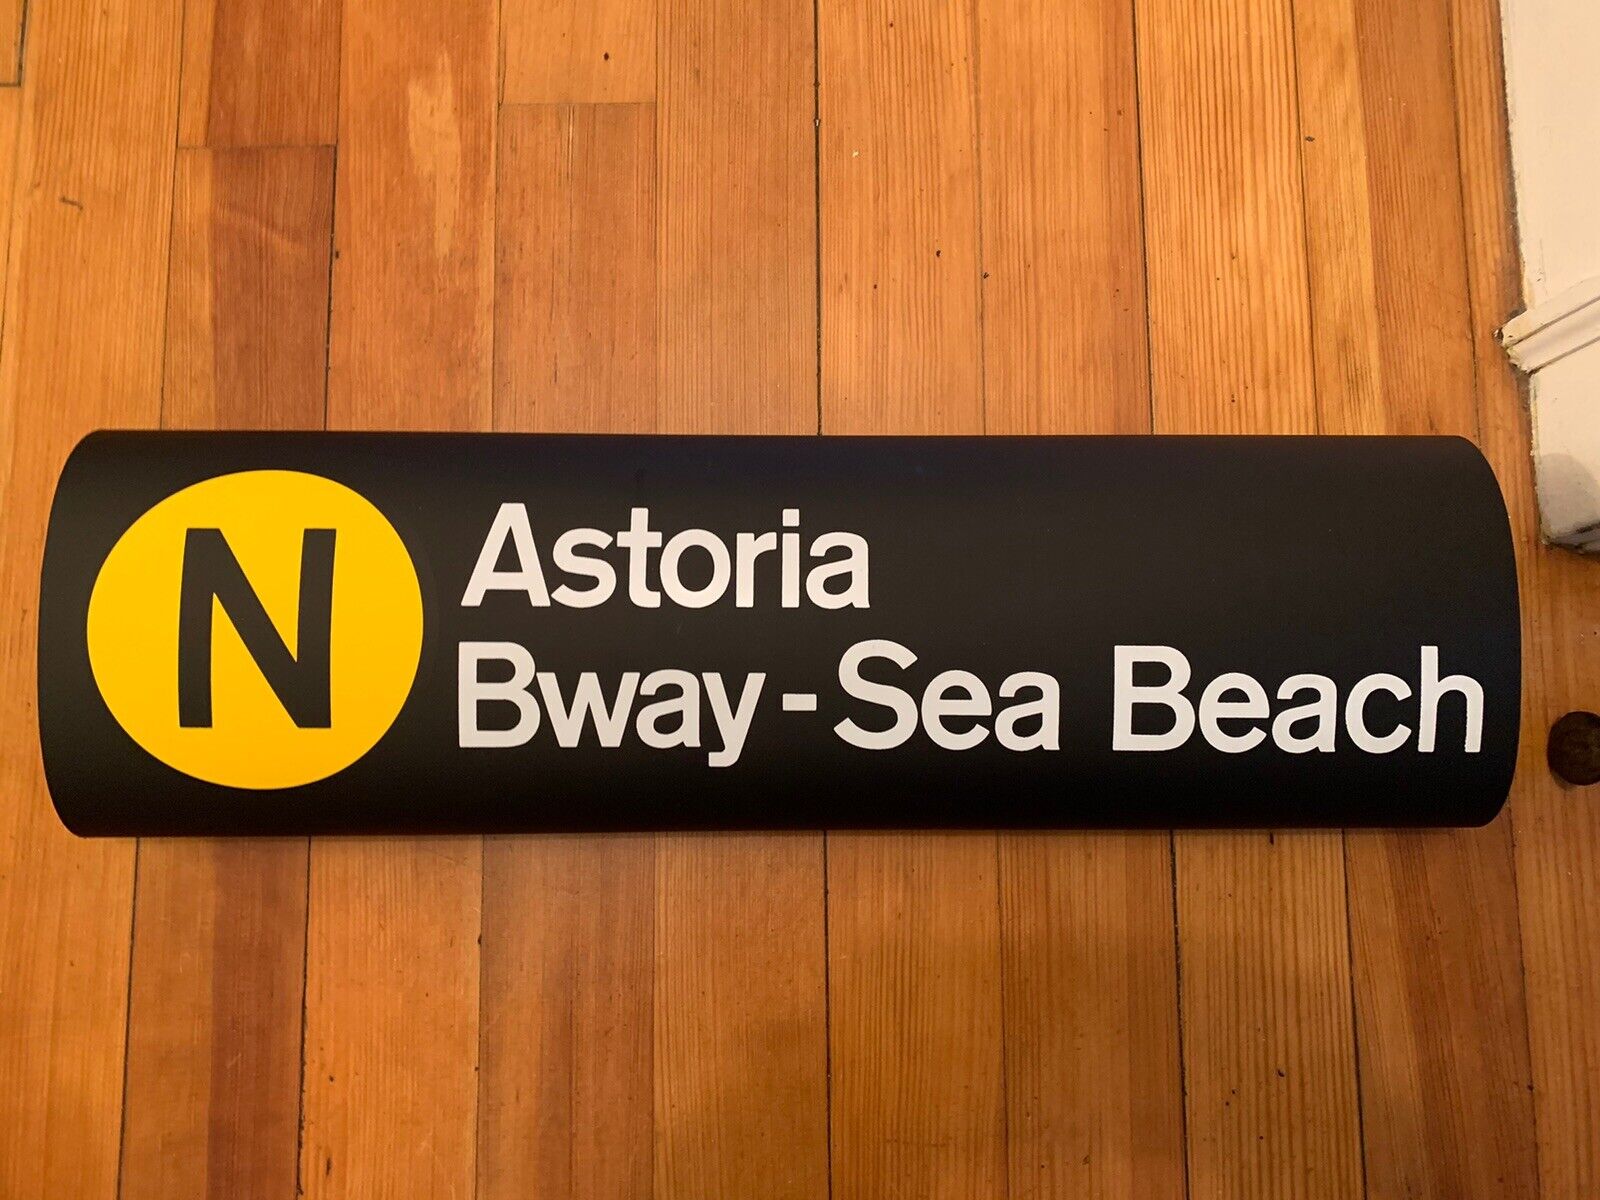 NY NYC SUBWAY ROLL SIGN N TRAIN ASTORIA BROADWAY SEA BEACH CONEY ISLAND 4th AVE.